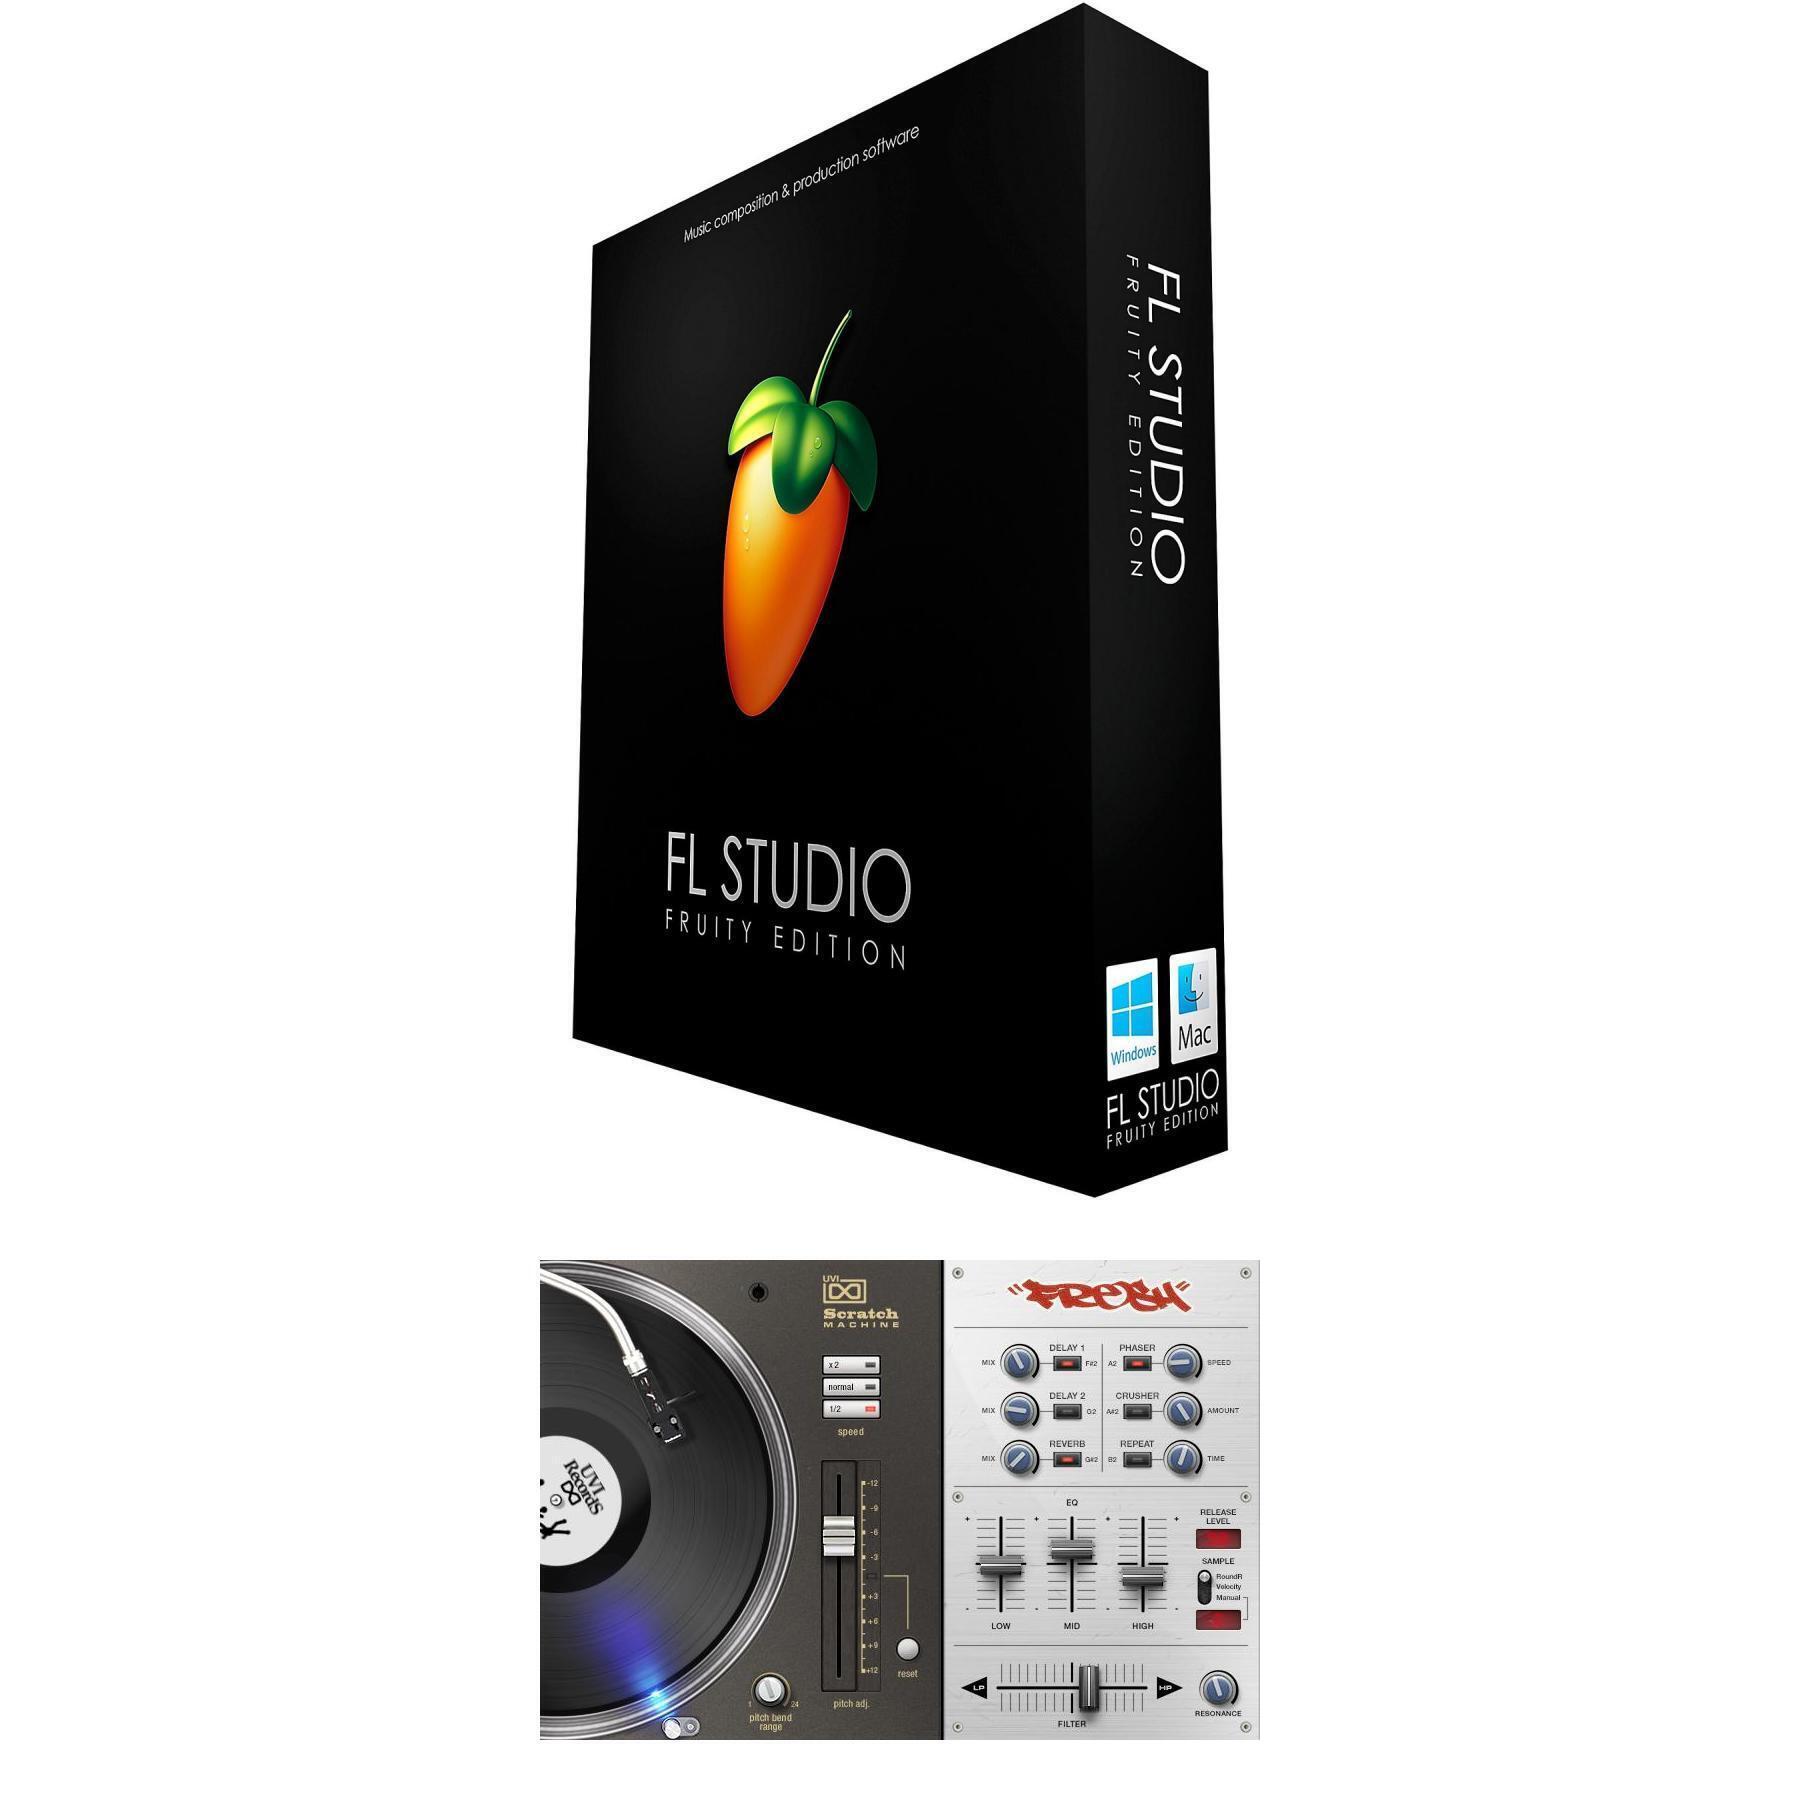 FL Studio 12.5  Released - FL Studio